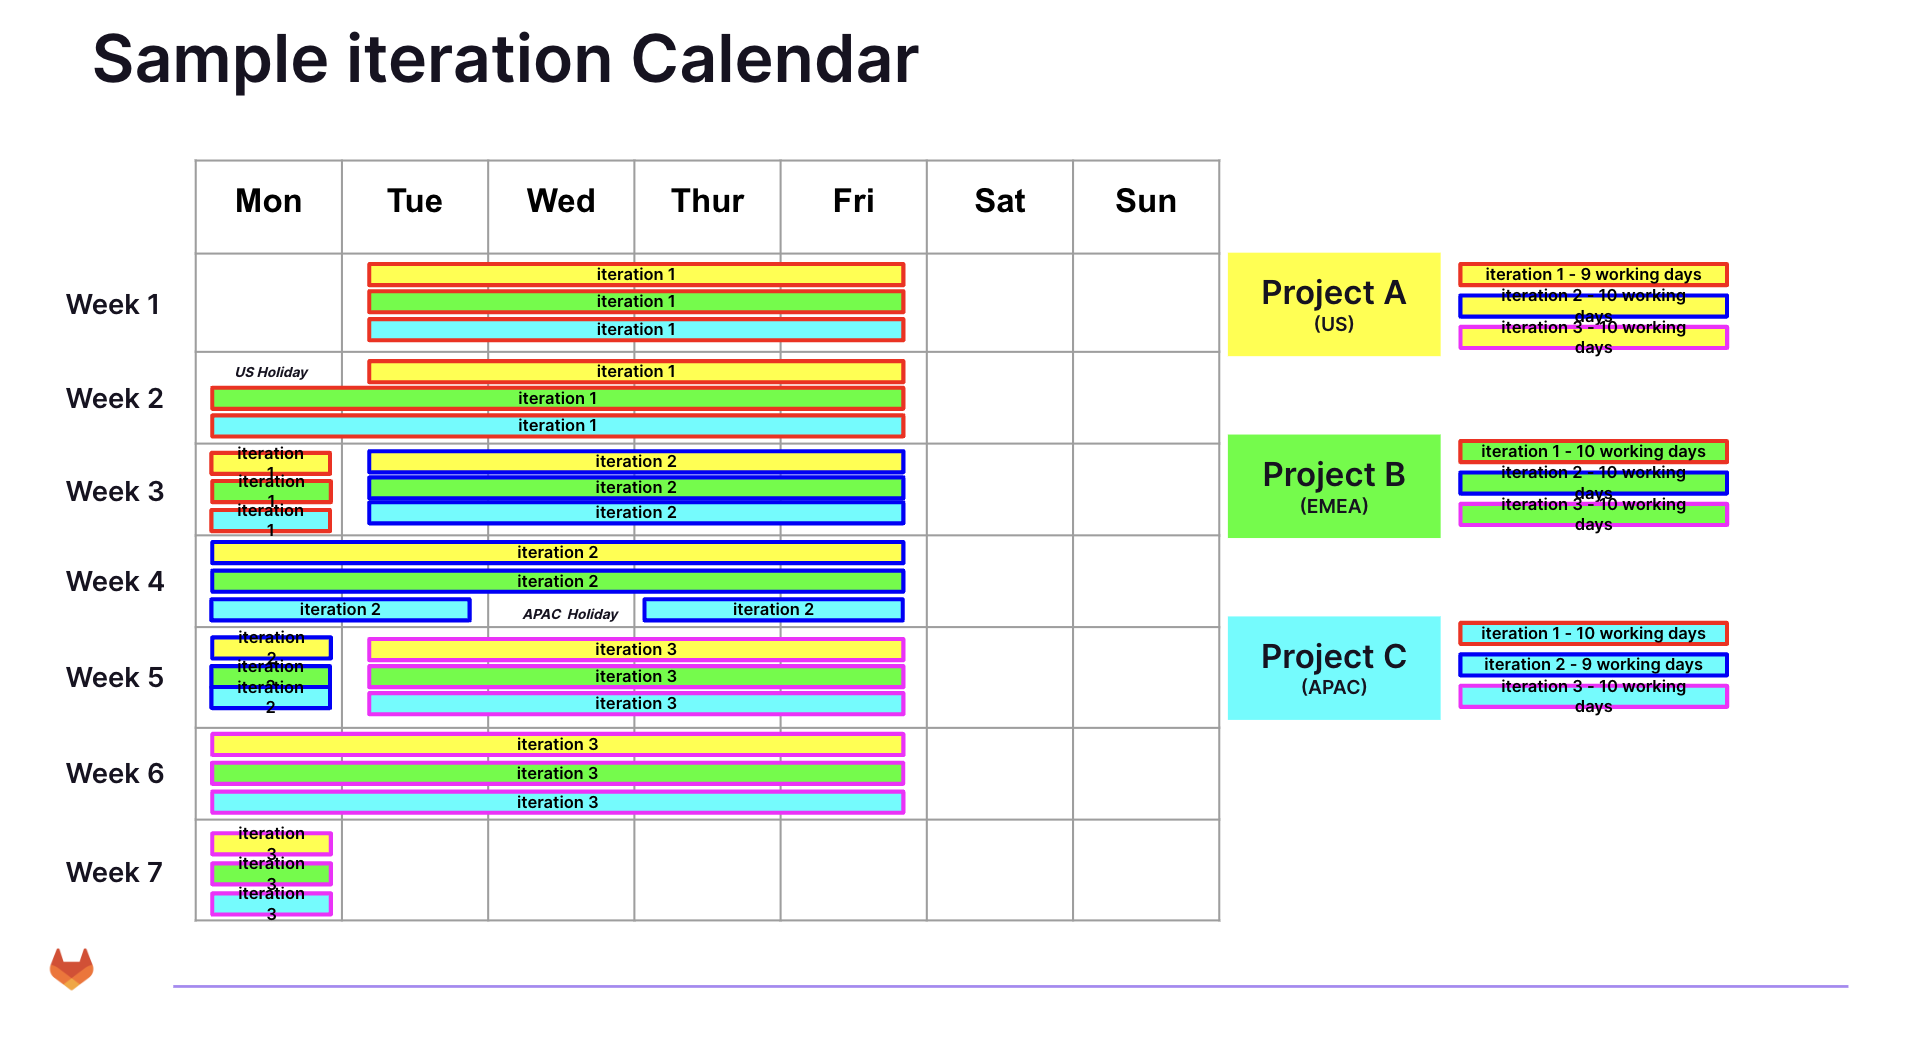 Sample Iteration Calendar